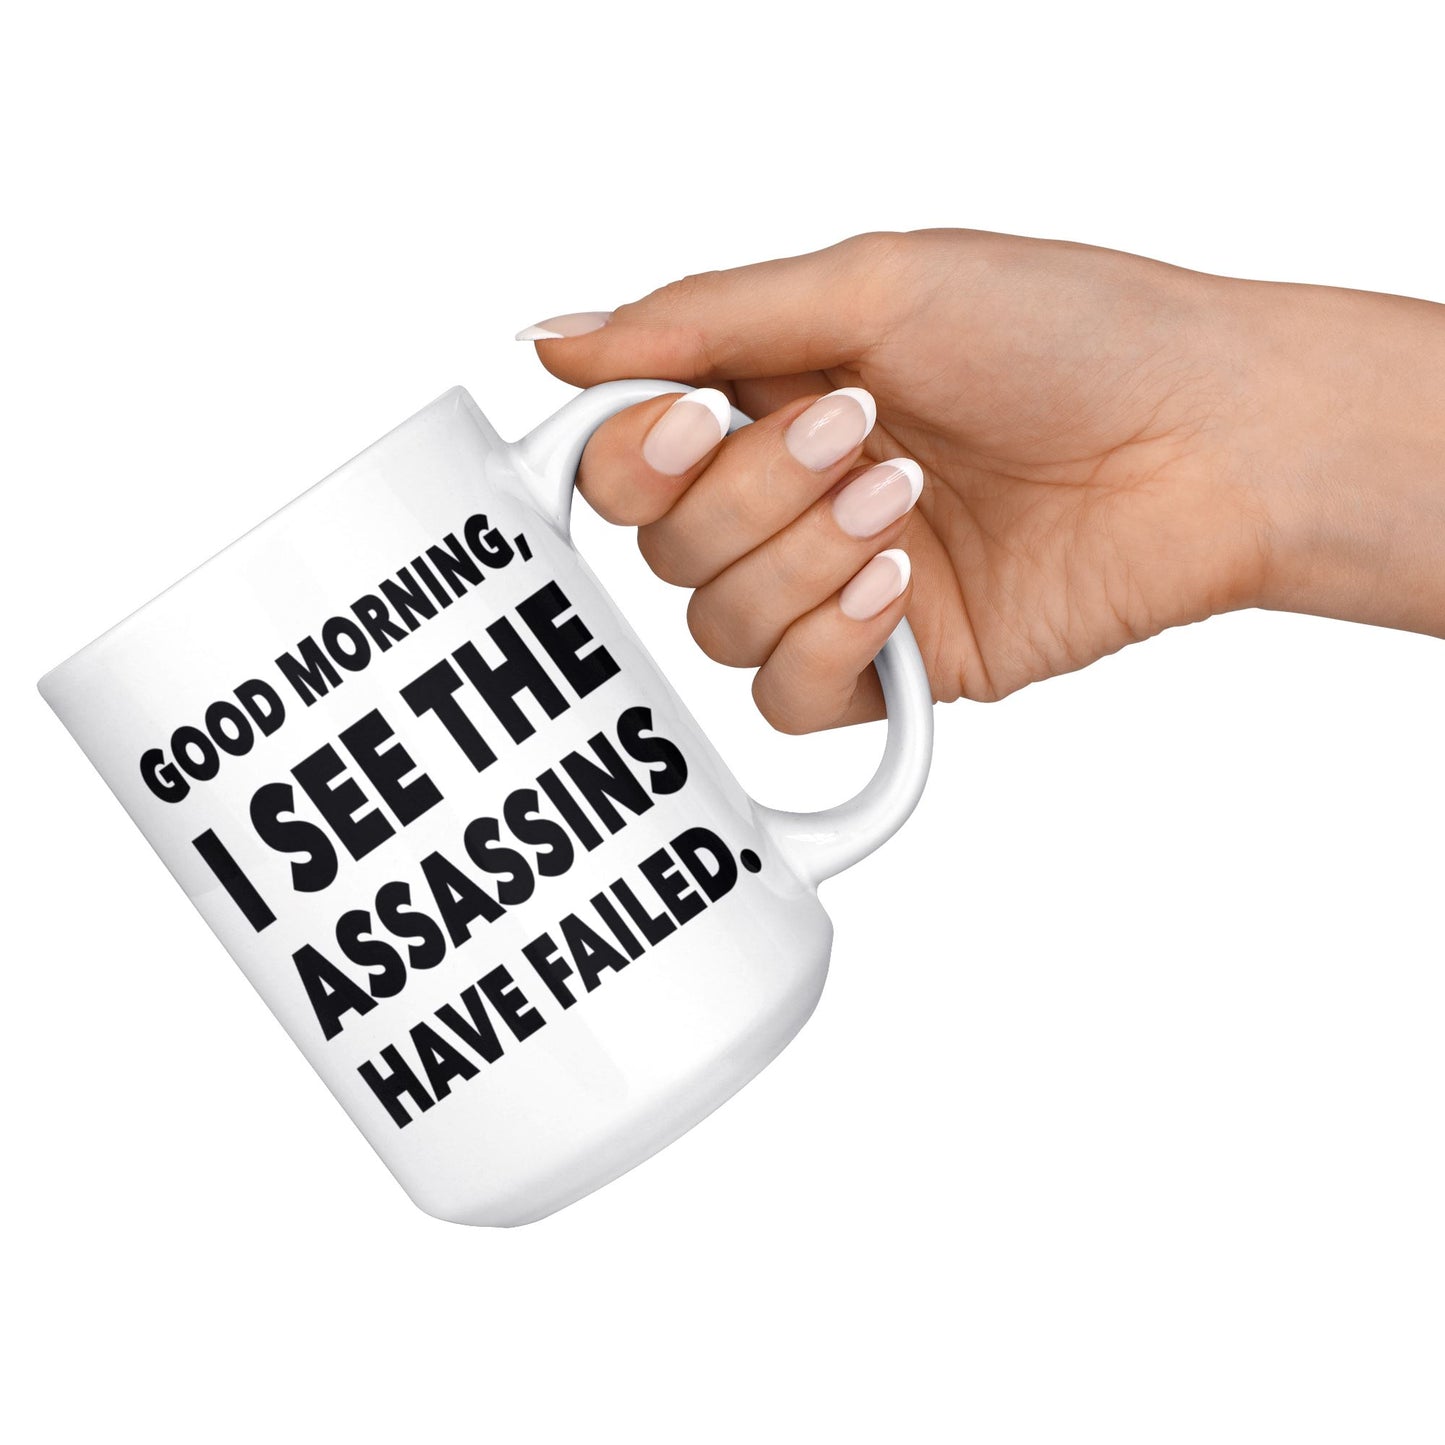 "Good Morning, I See The Assassins Have Failed" - Coffee Mug Drinkware 